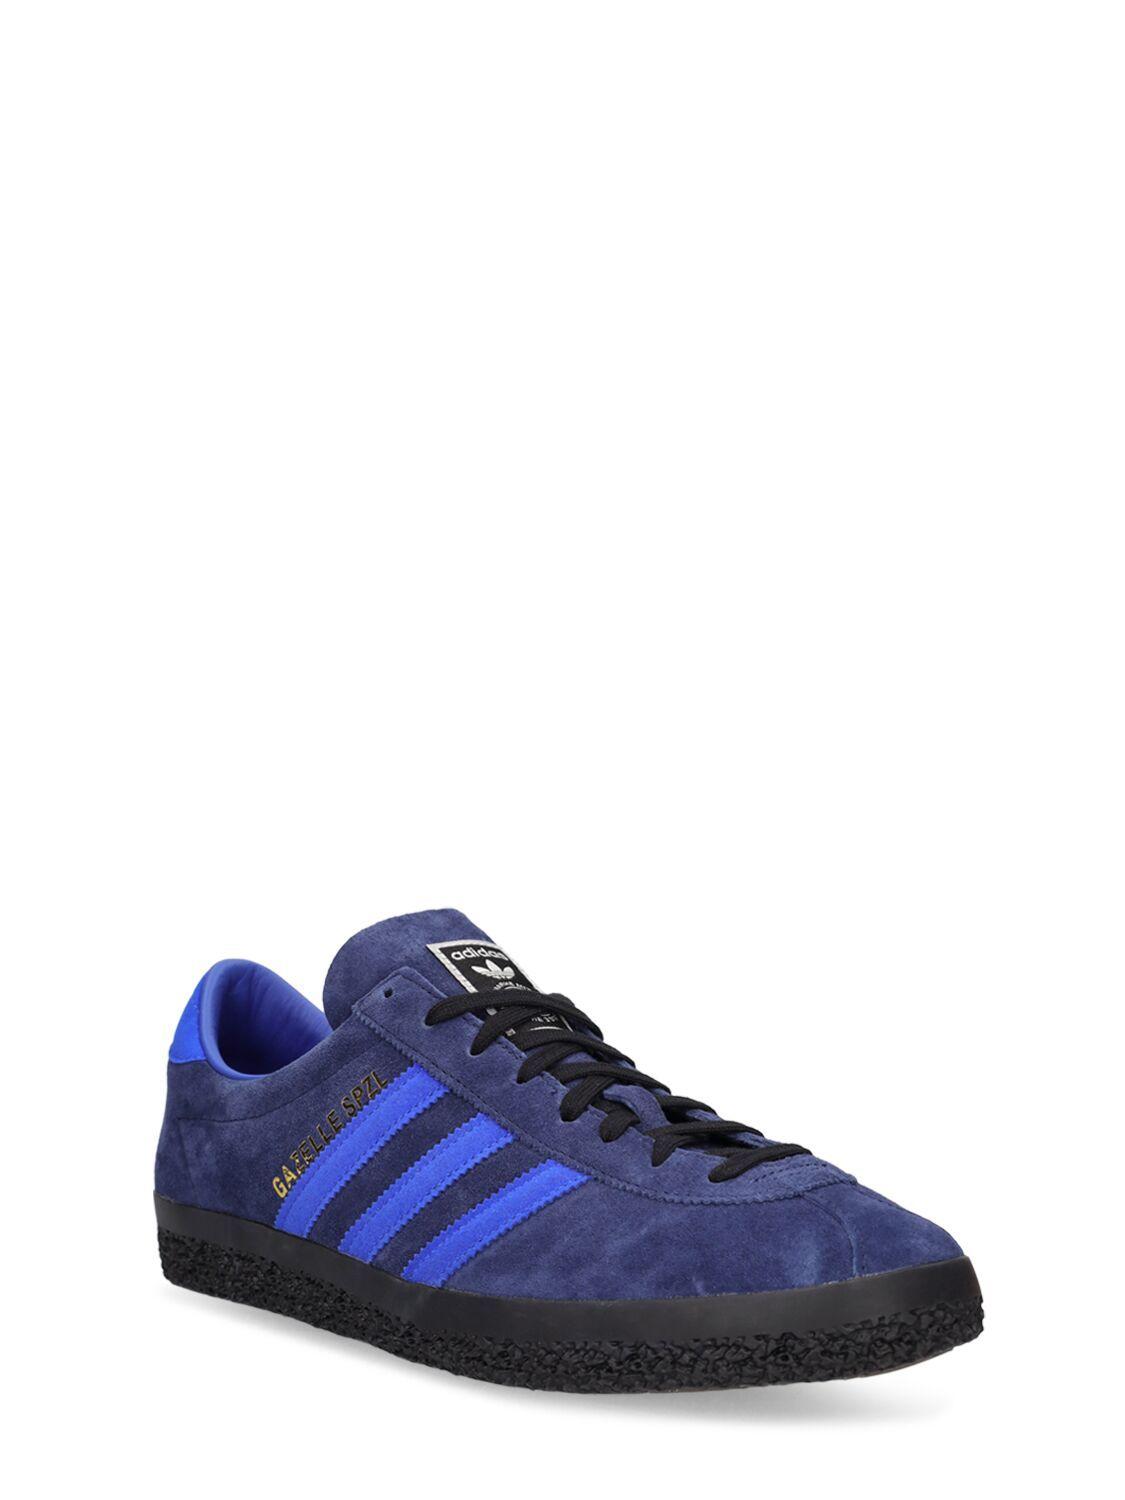 adidas Originals Gazelle Spezial Sneakers in Blue for Men | Lyst